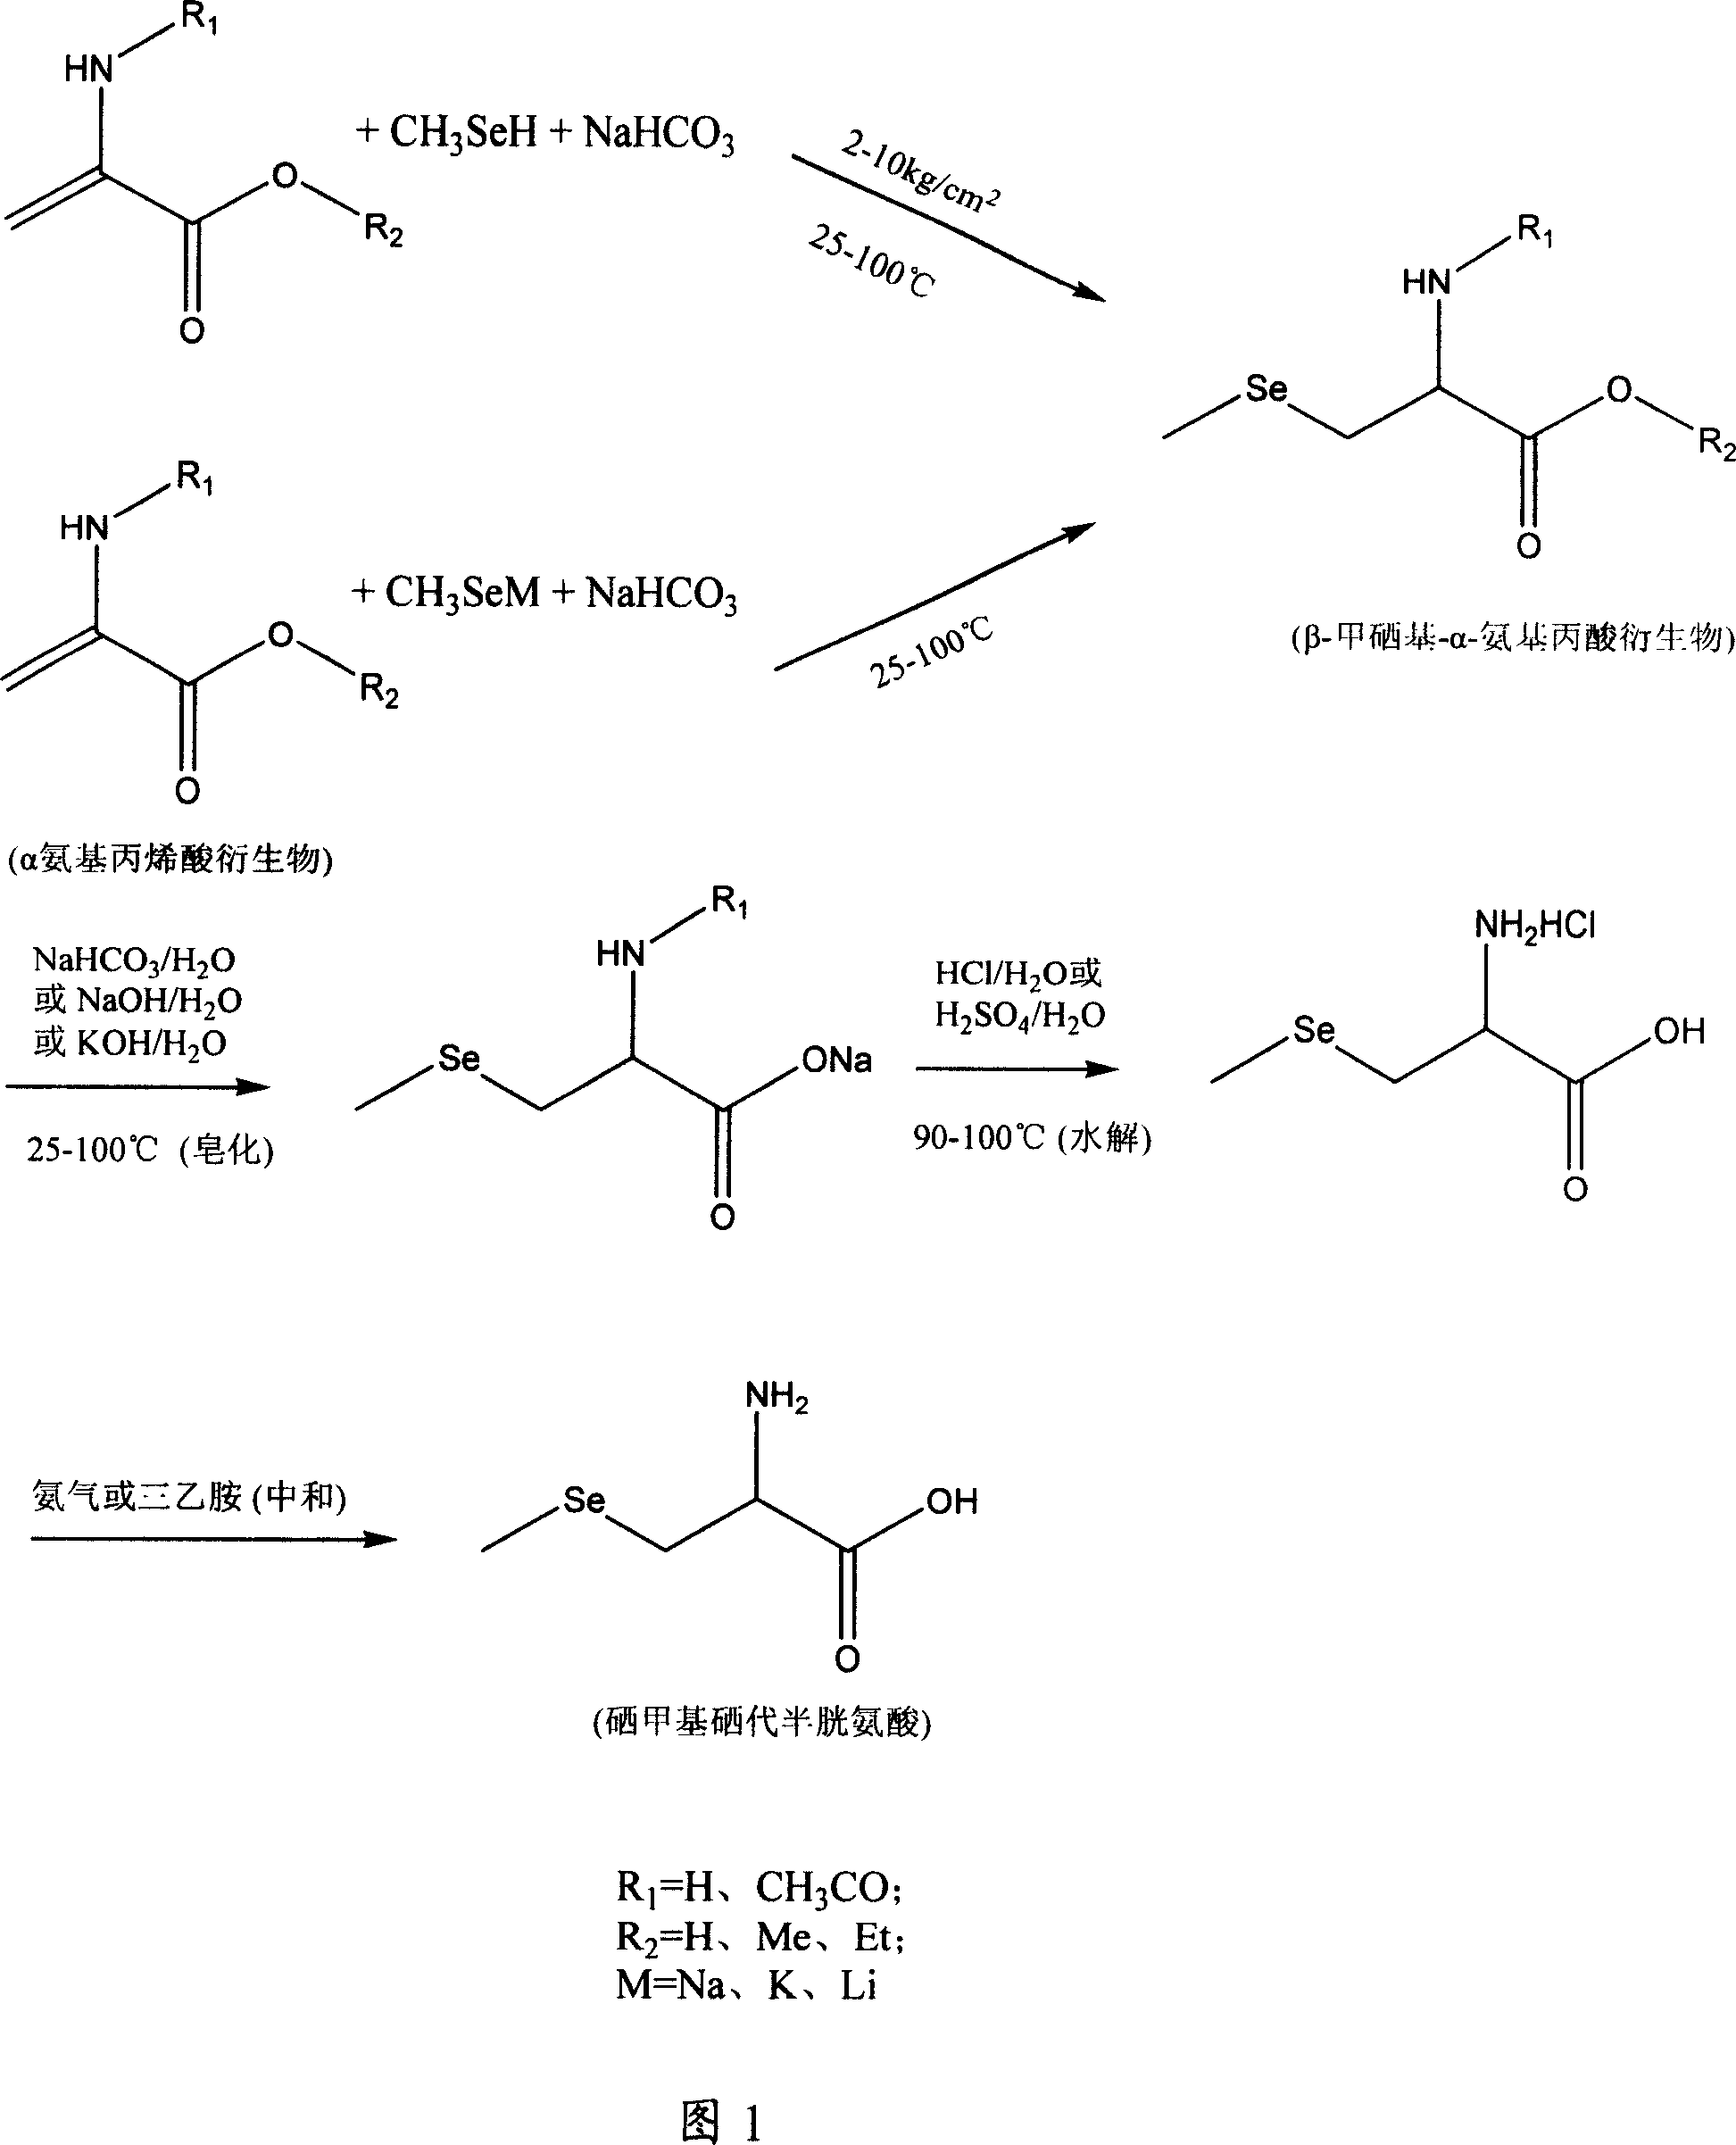 Method of preparing methylselenocysteine from alpha-amino acrylic acid derivative